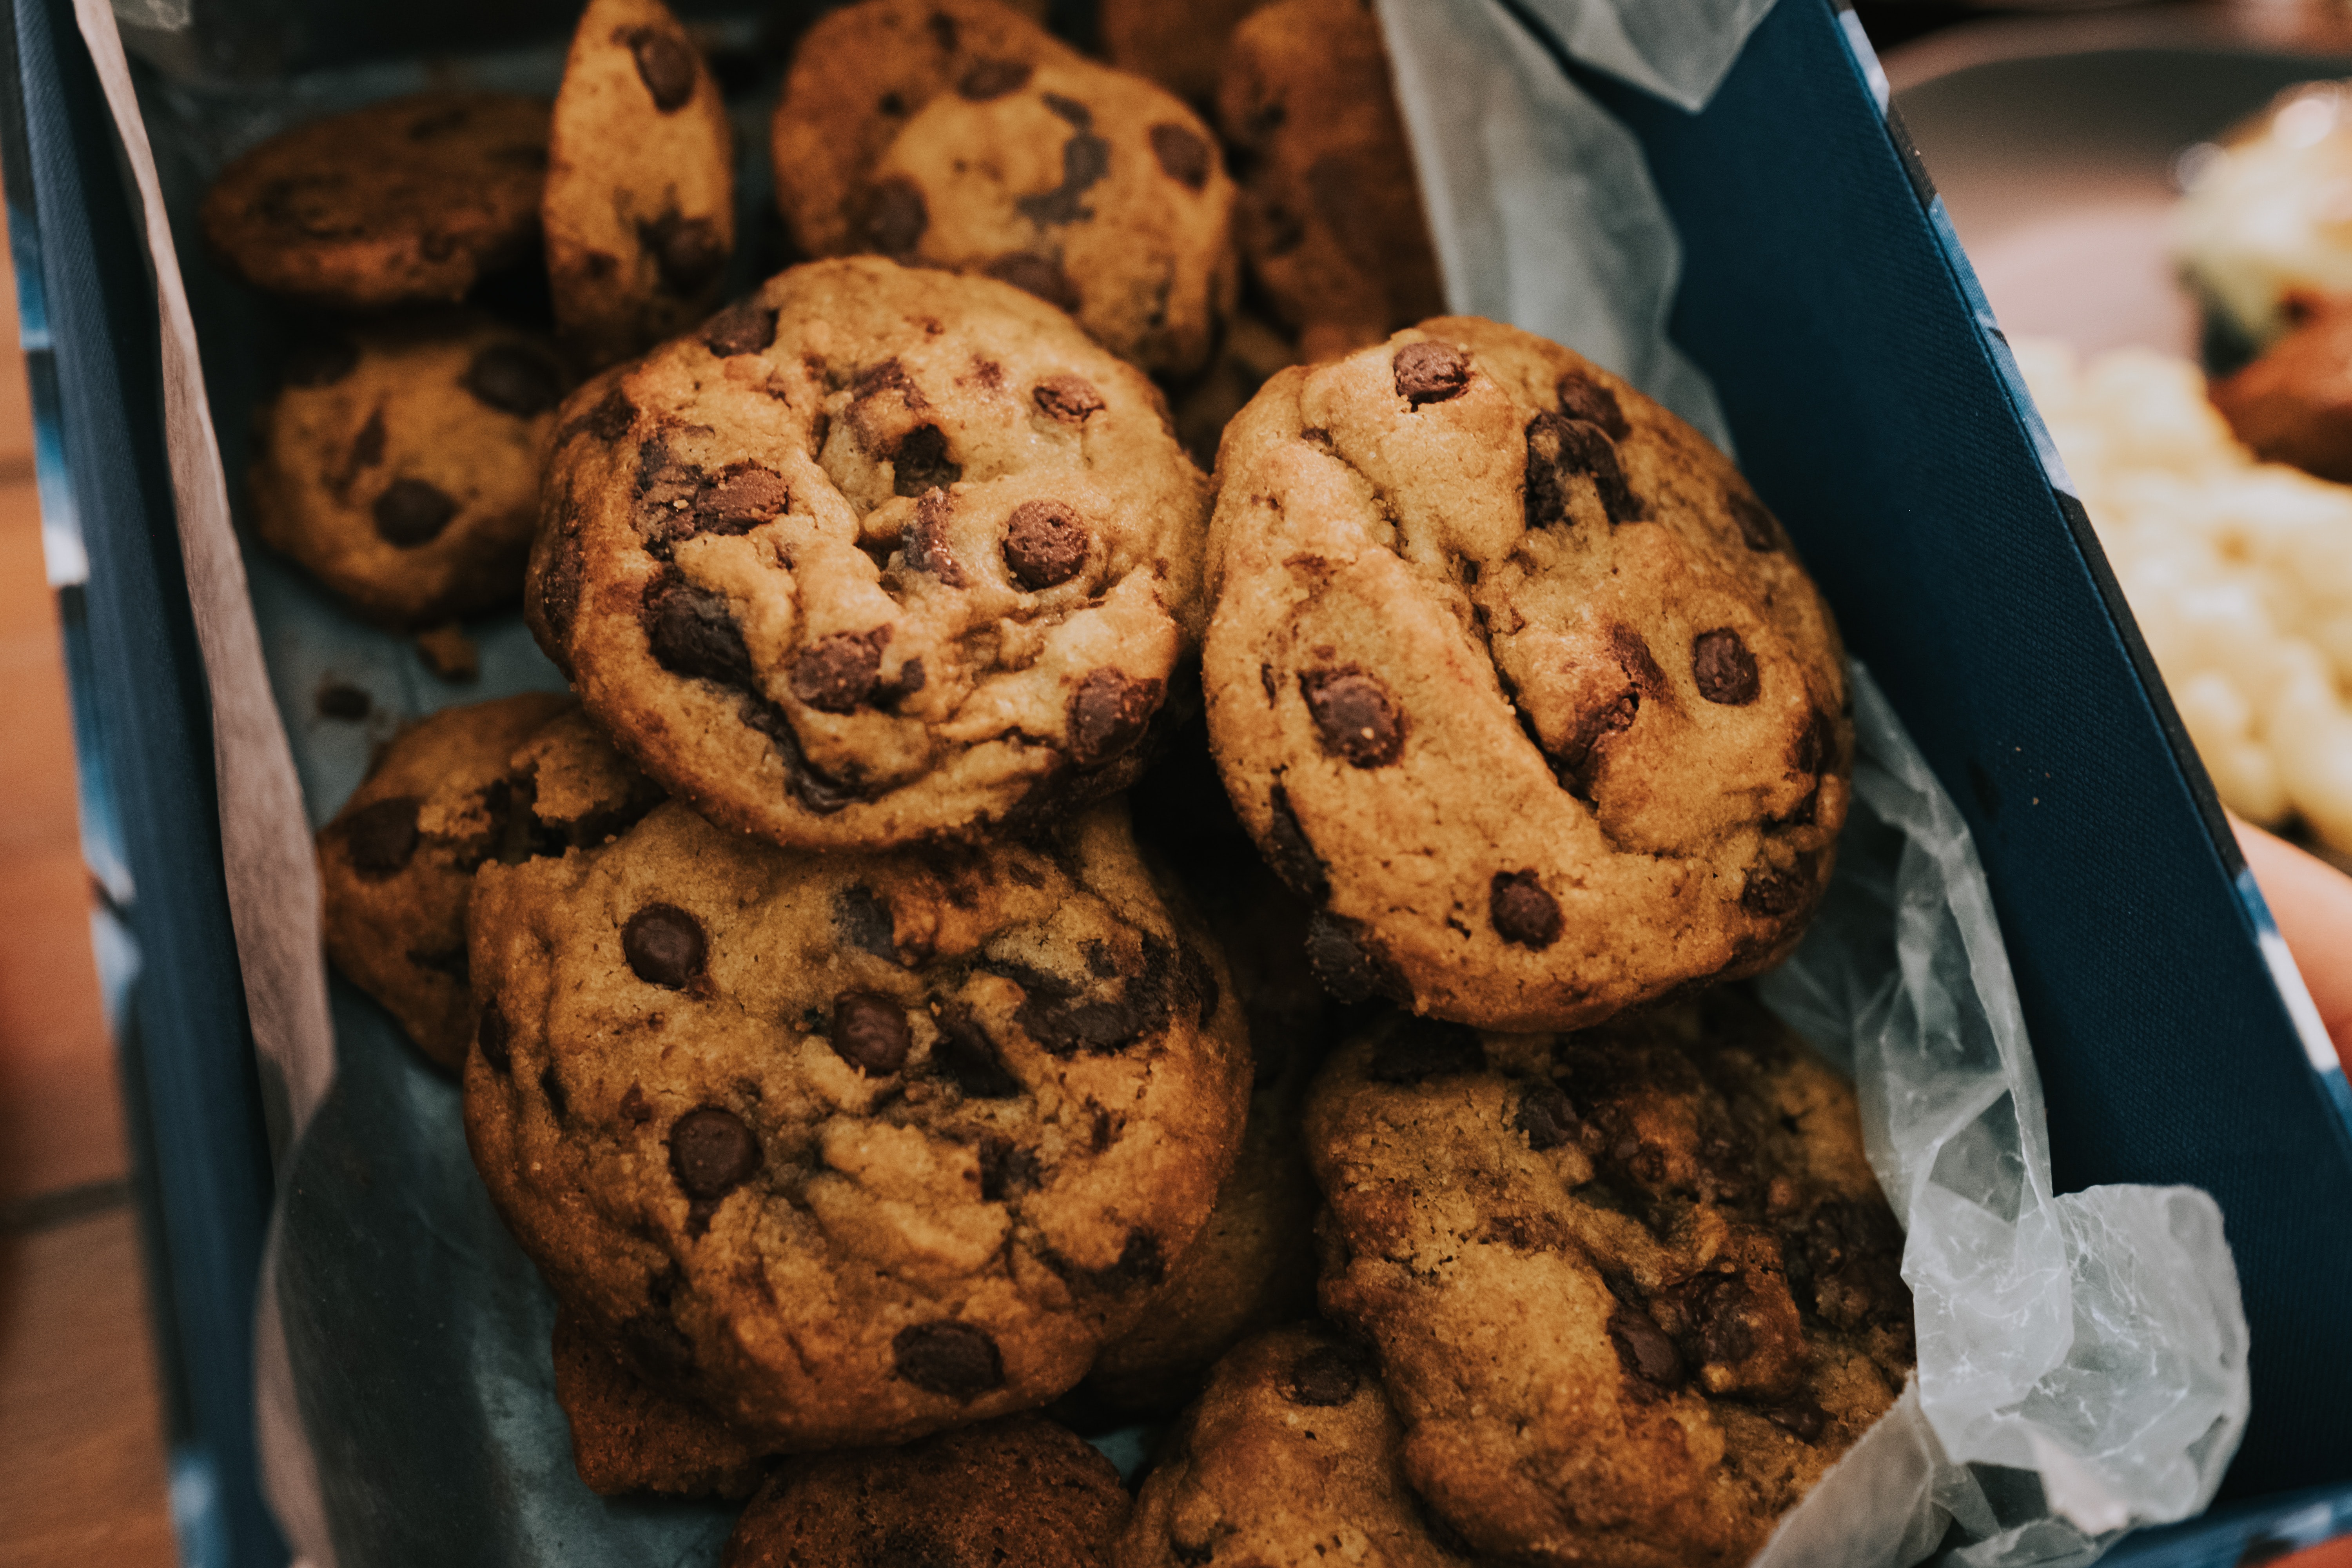 Chocolate cookies: Photo by @sjcbrn on Unsplash